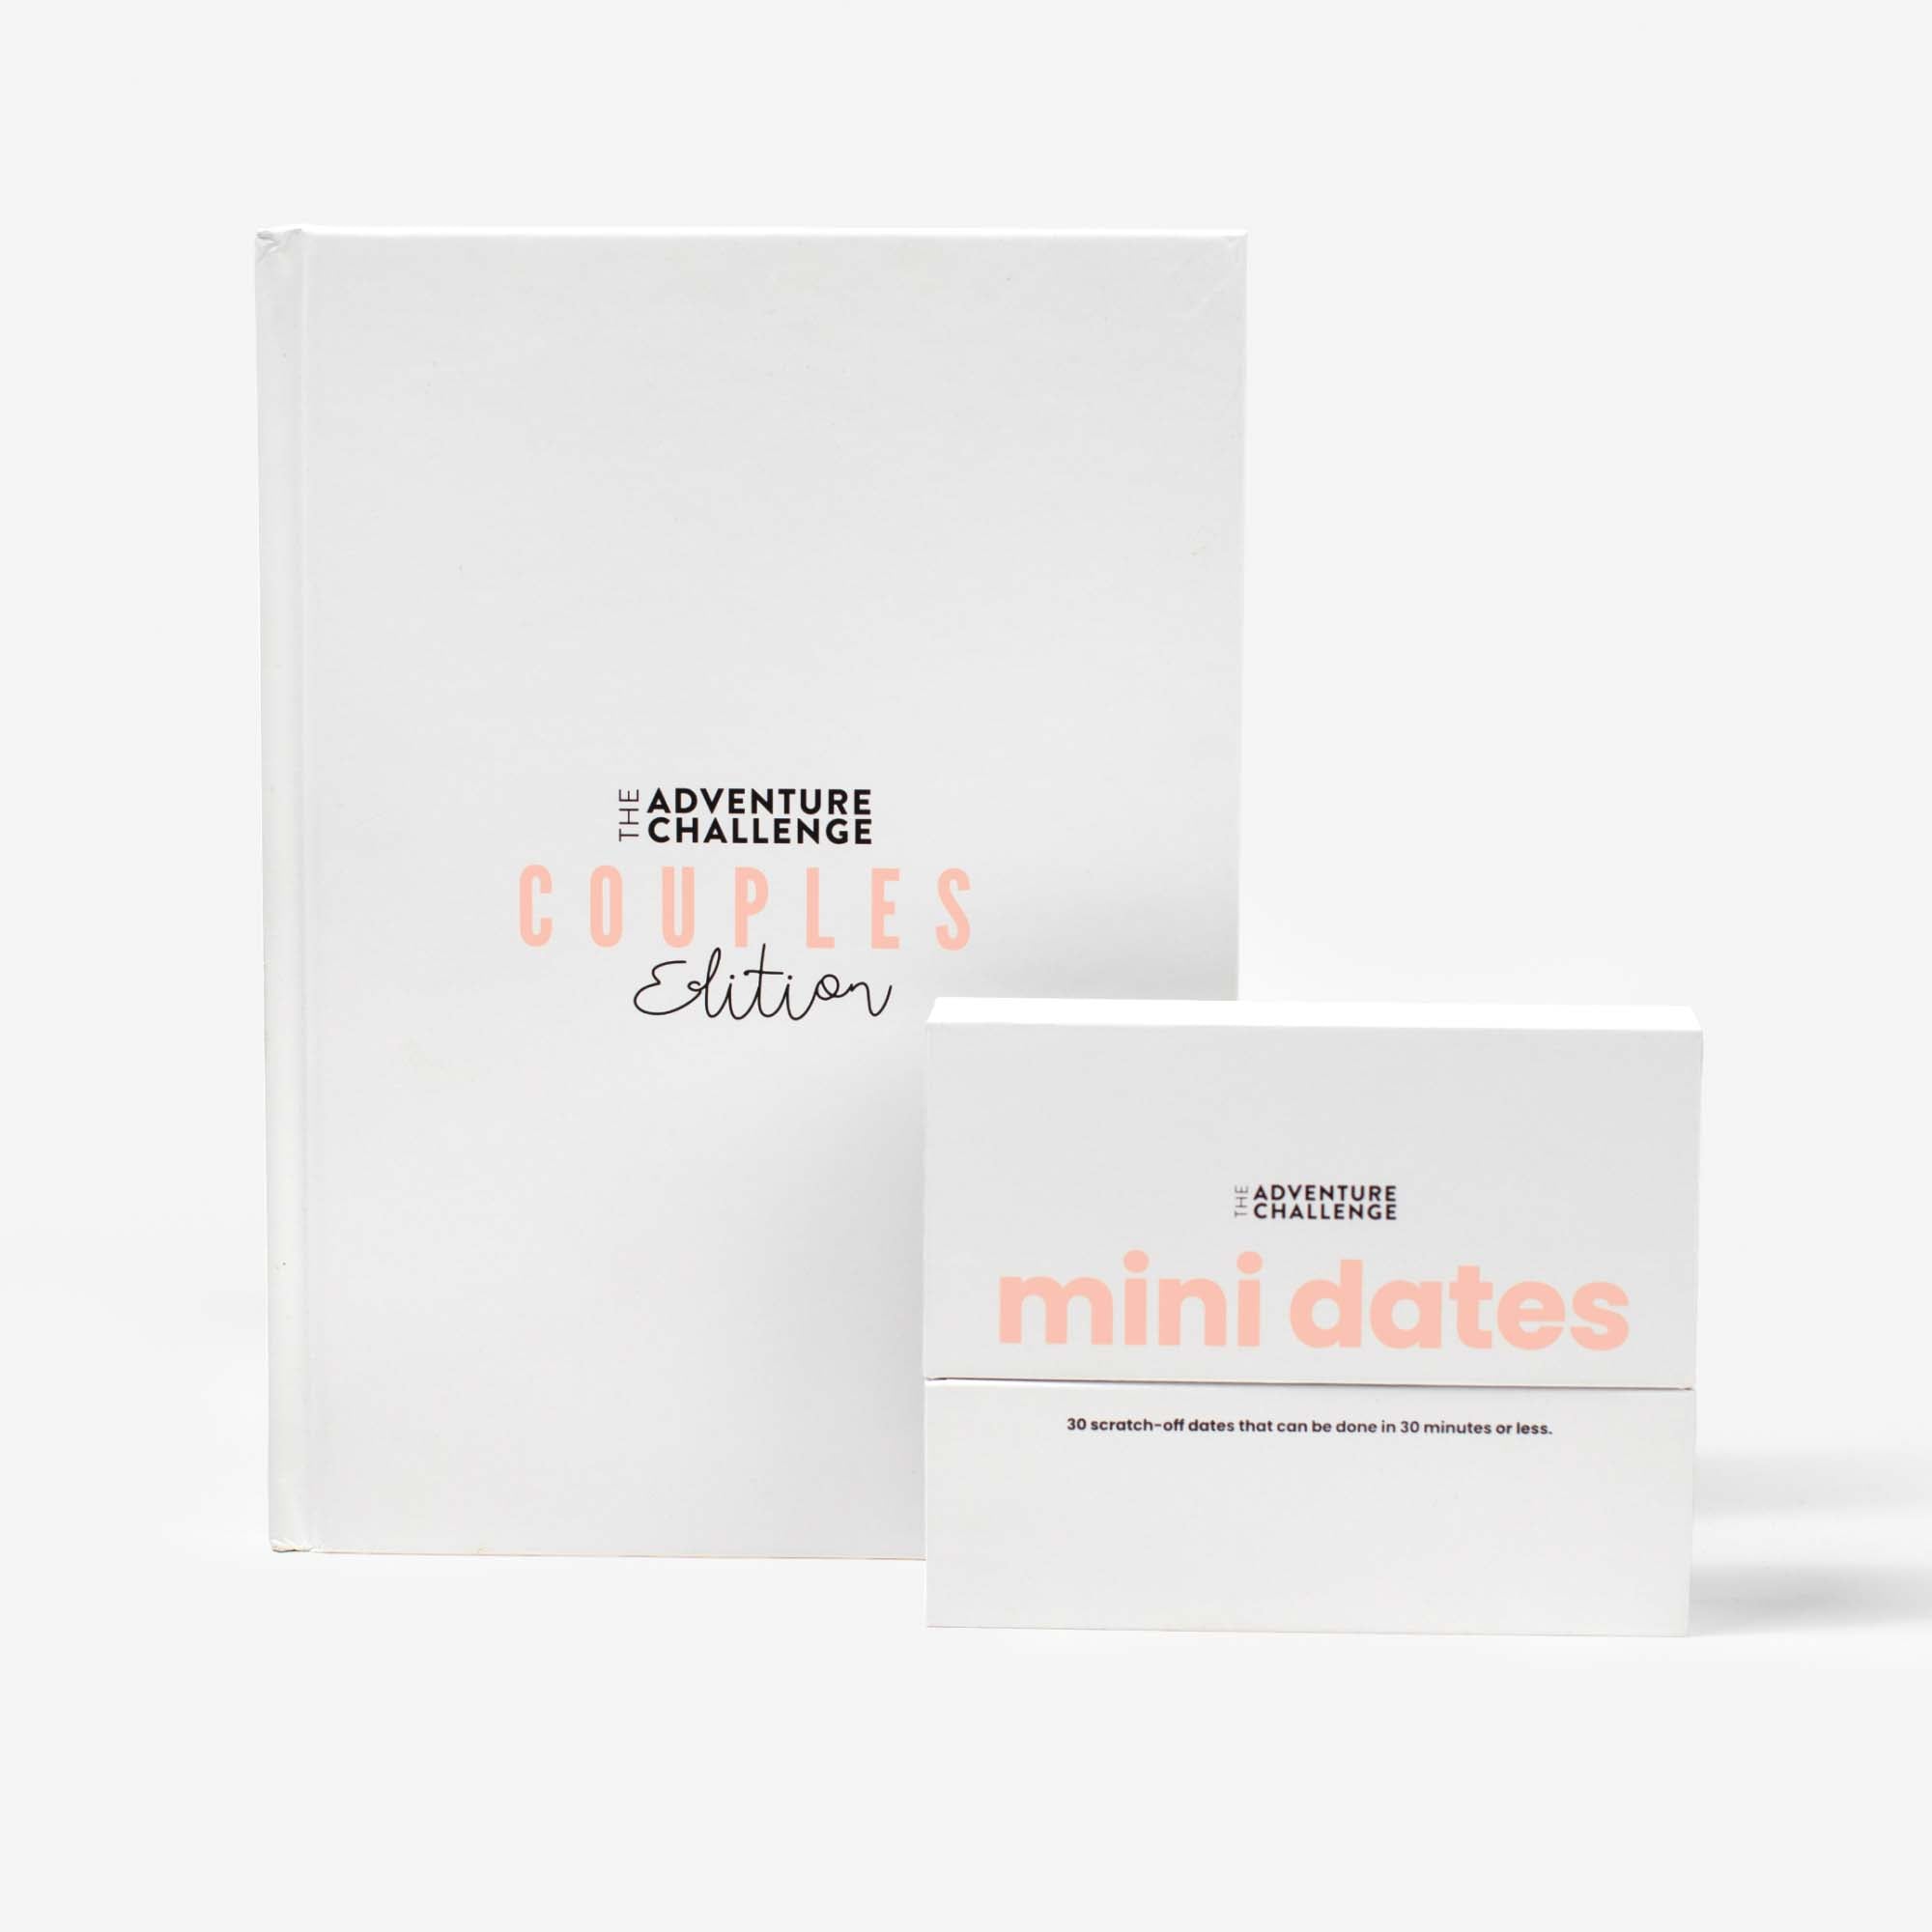 Mini Dates and Couples Edition Bundle